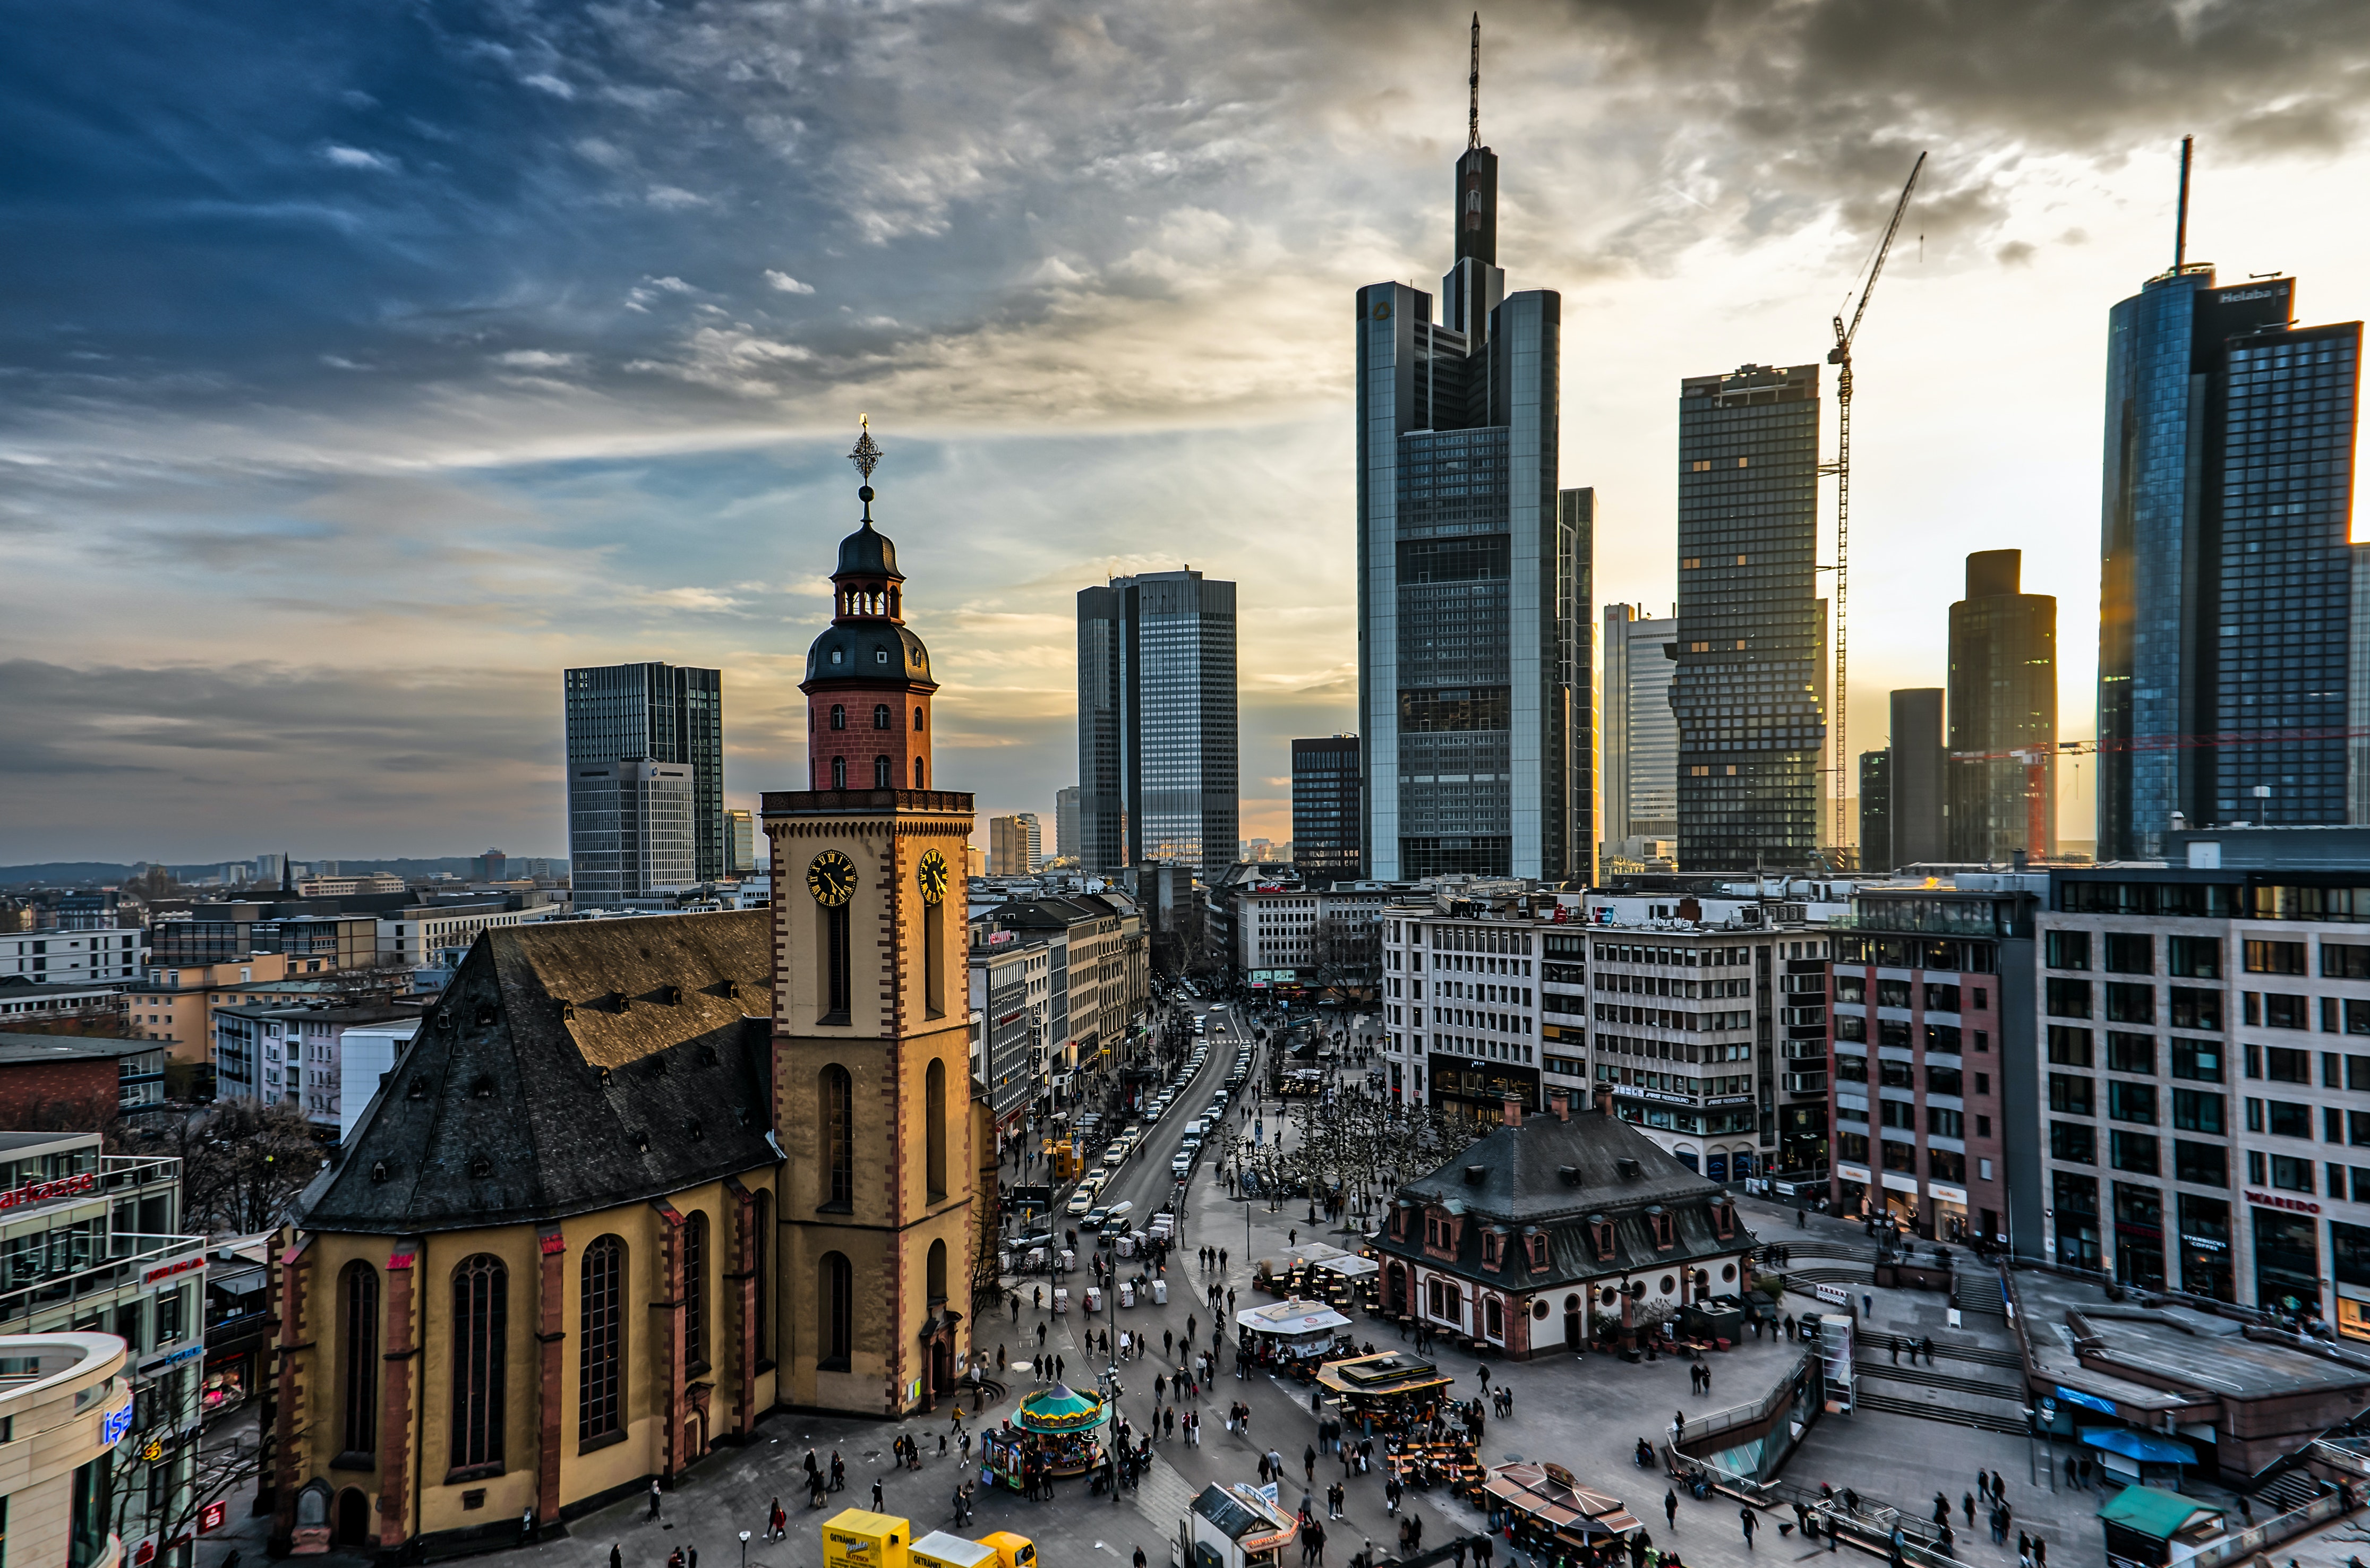 Frankfurt photos download the best free frankfurt stock photos hd images